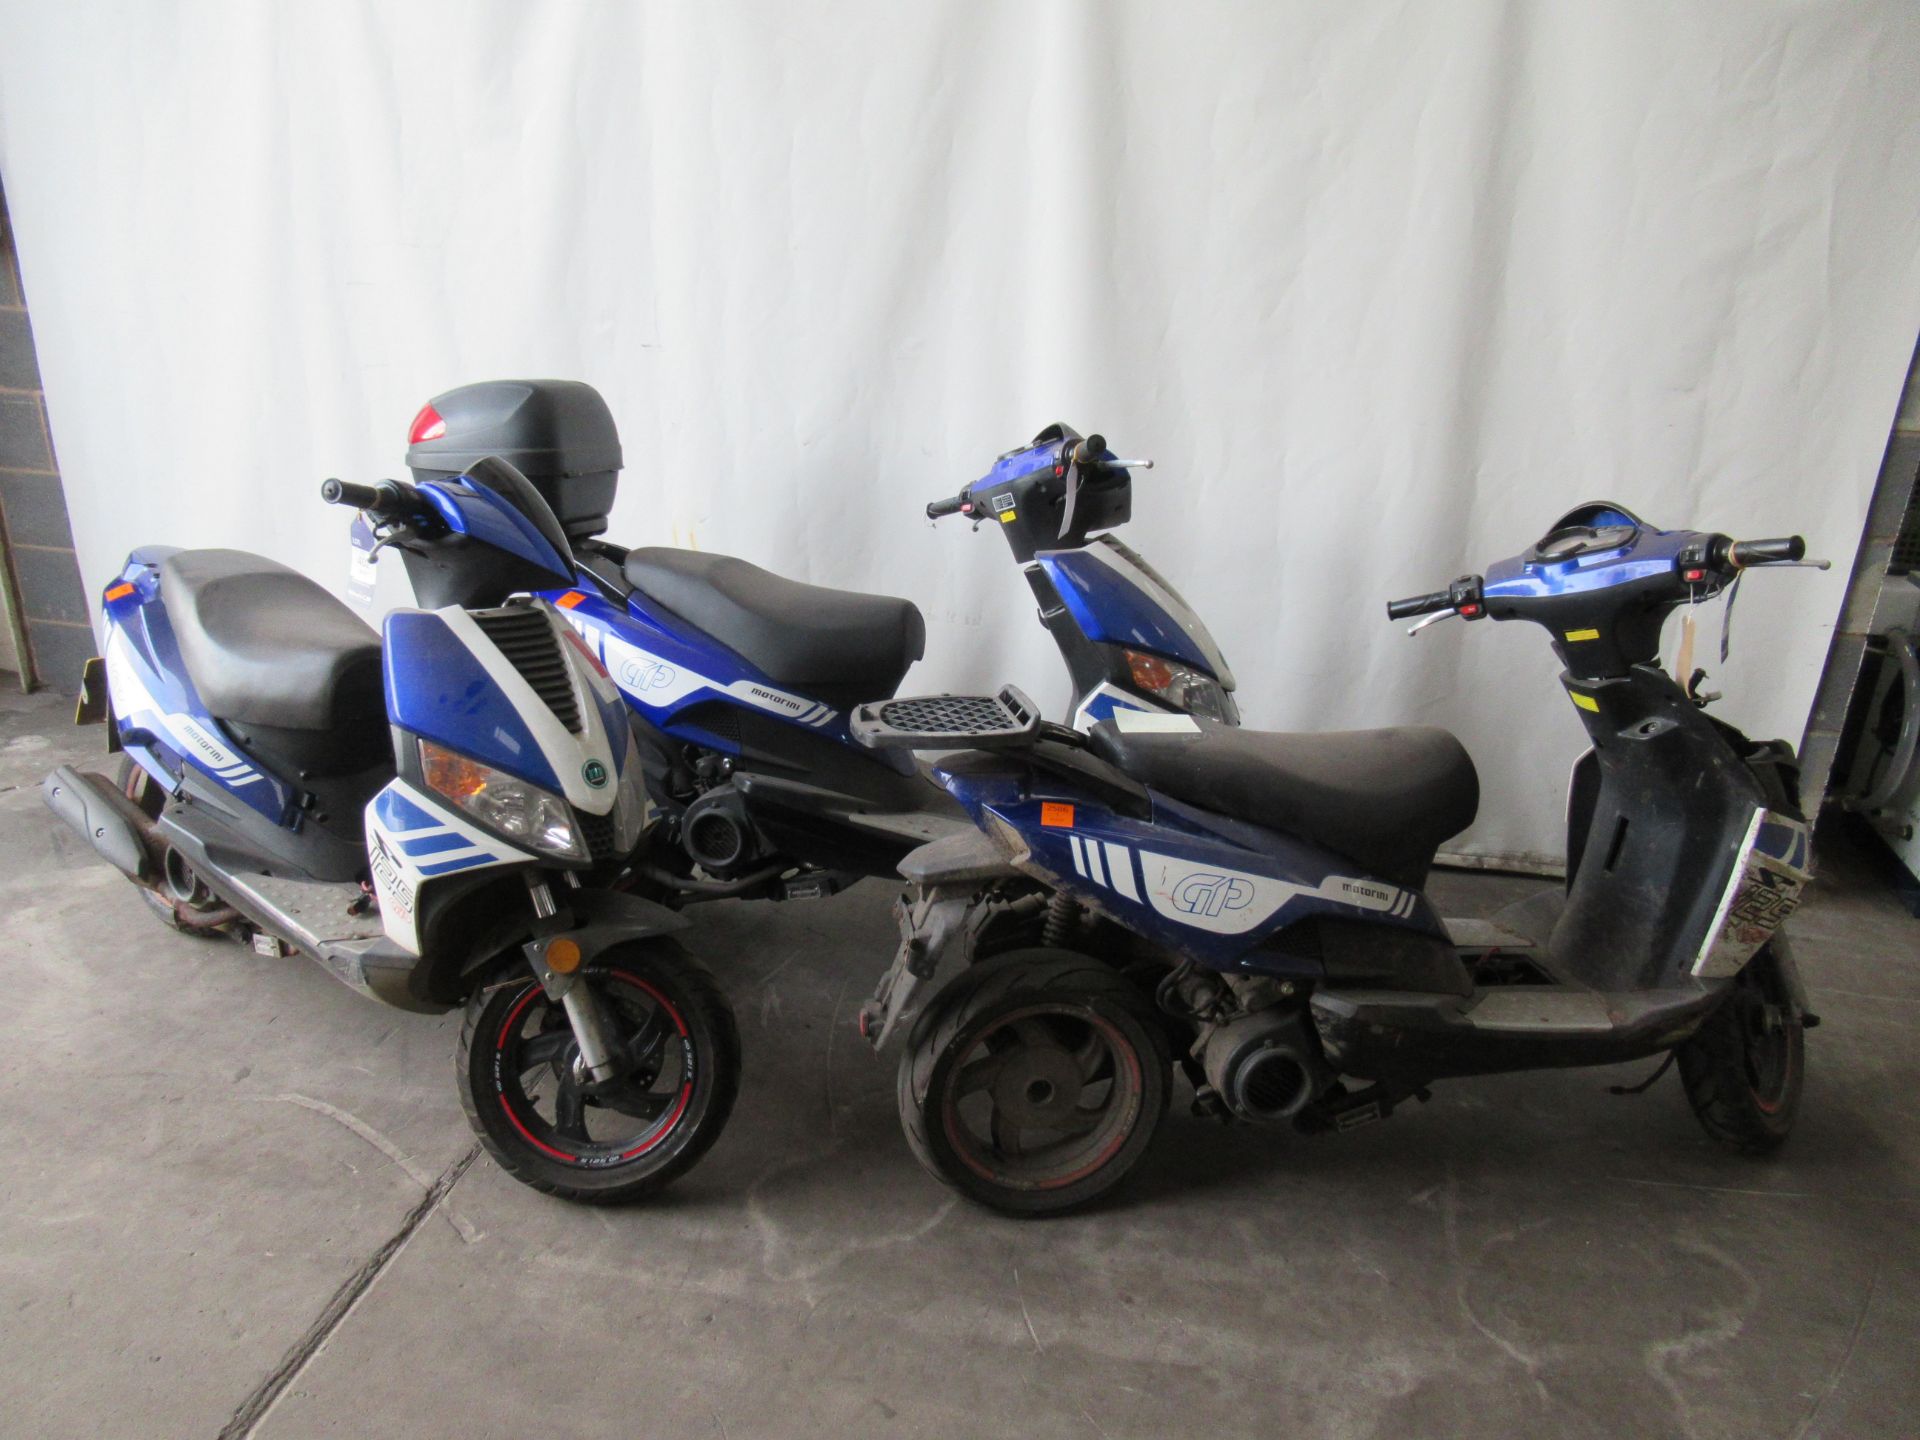 3x Motorini GP125i motorbikes